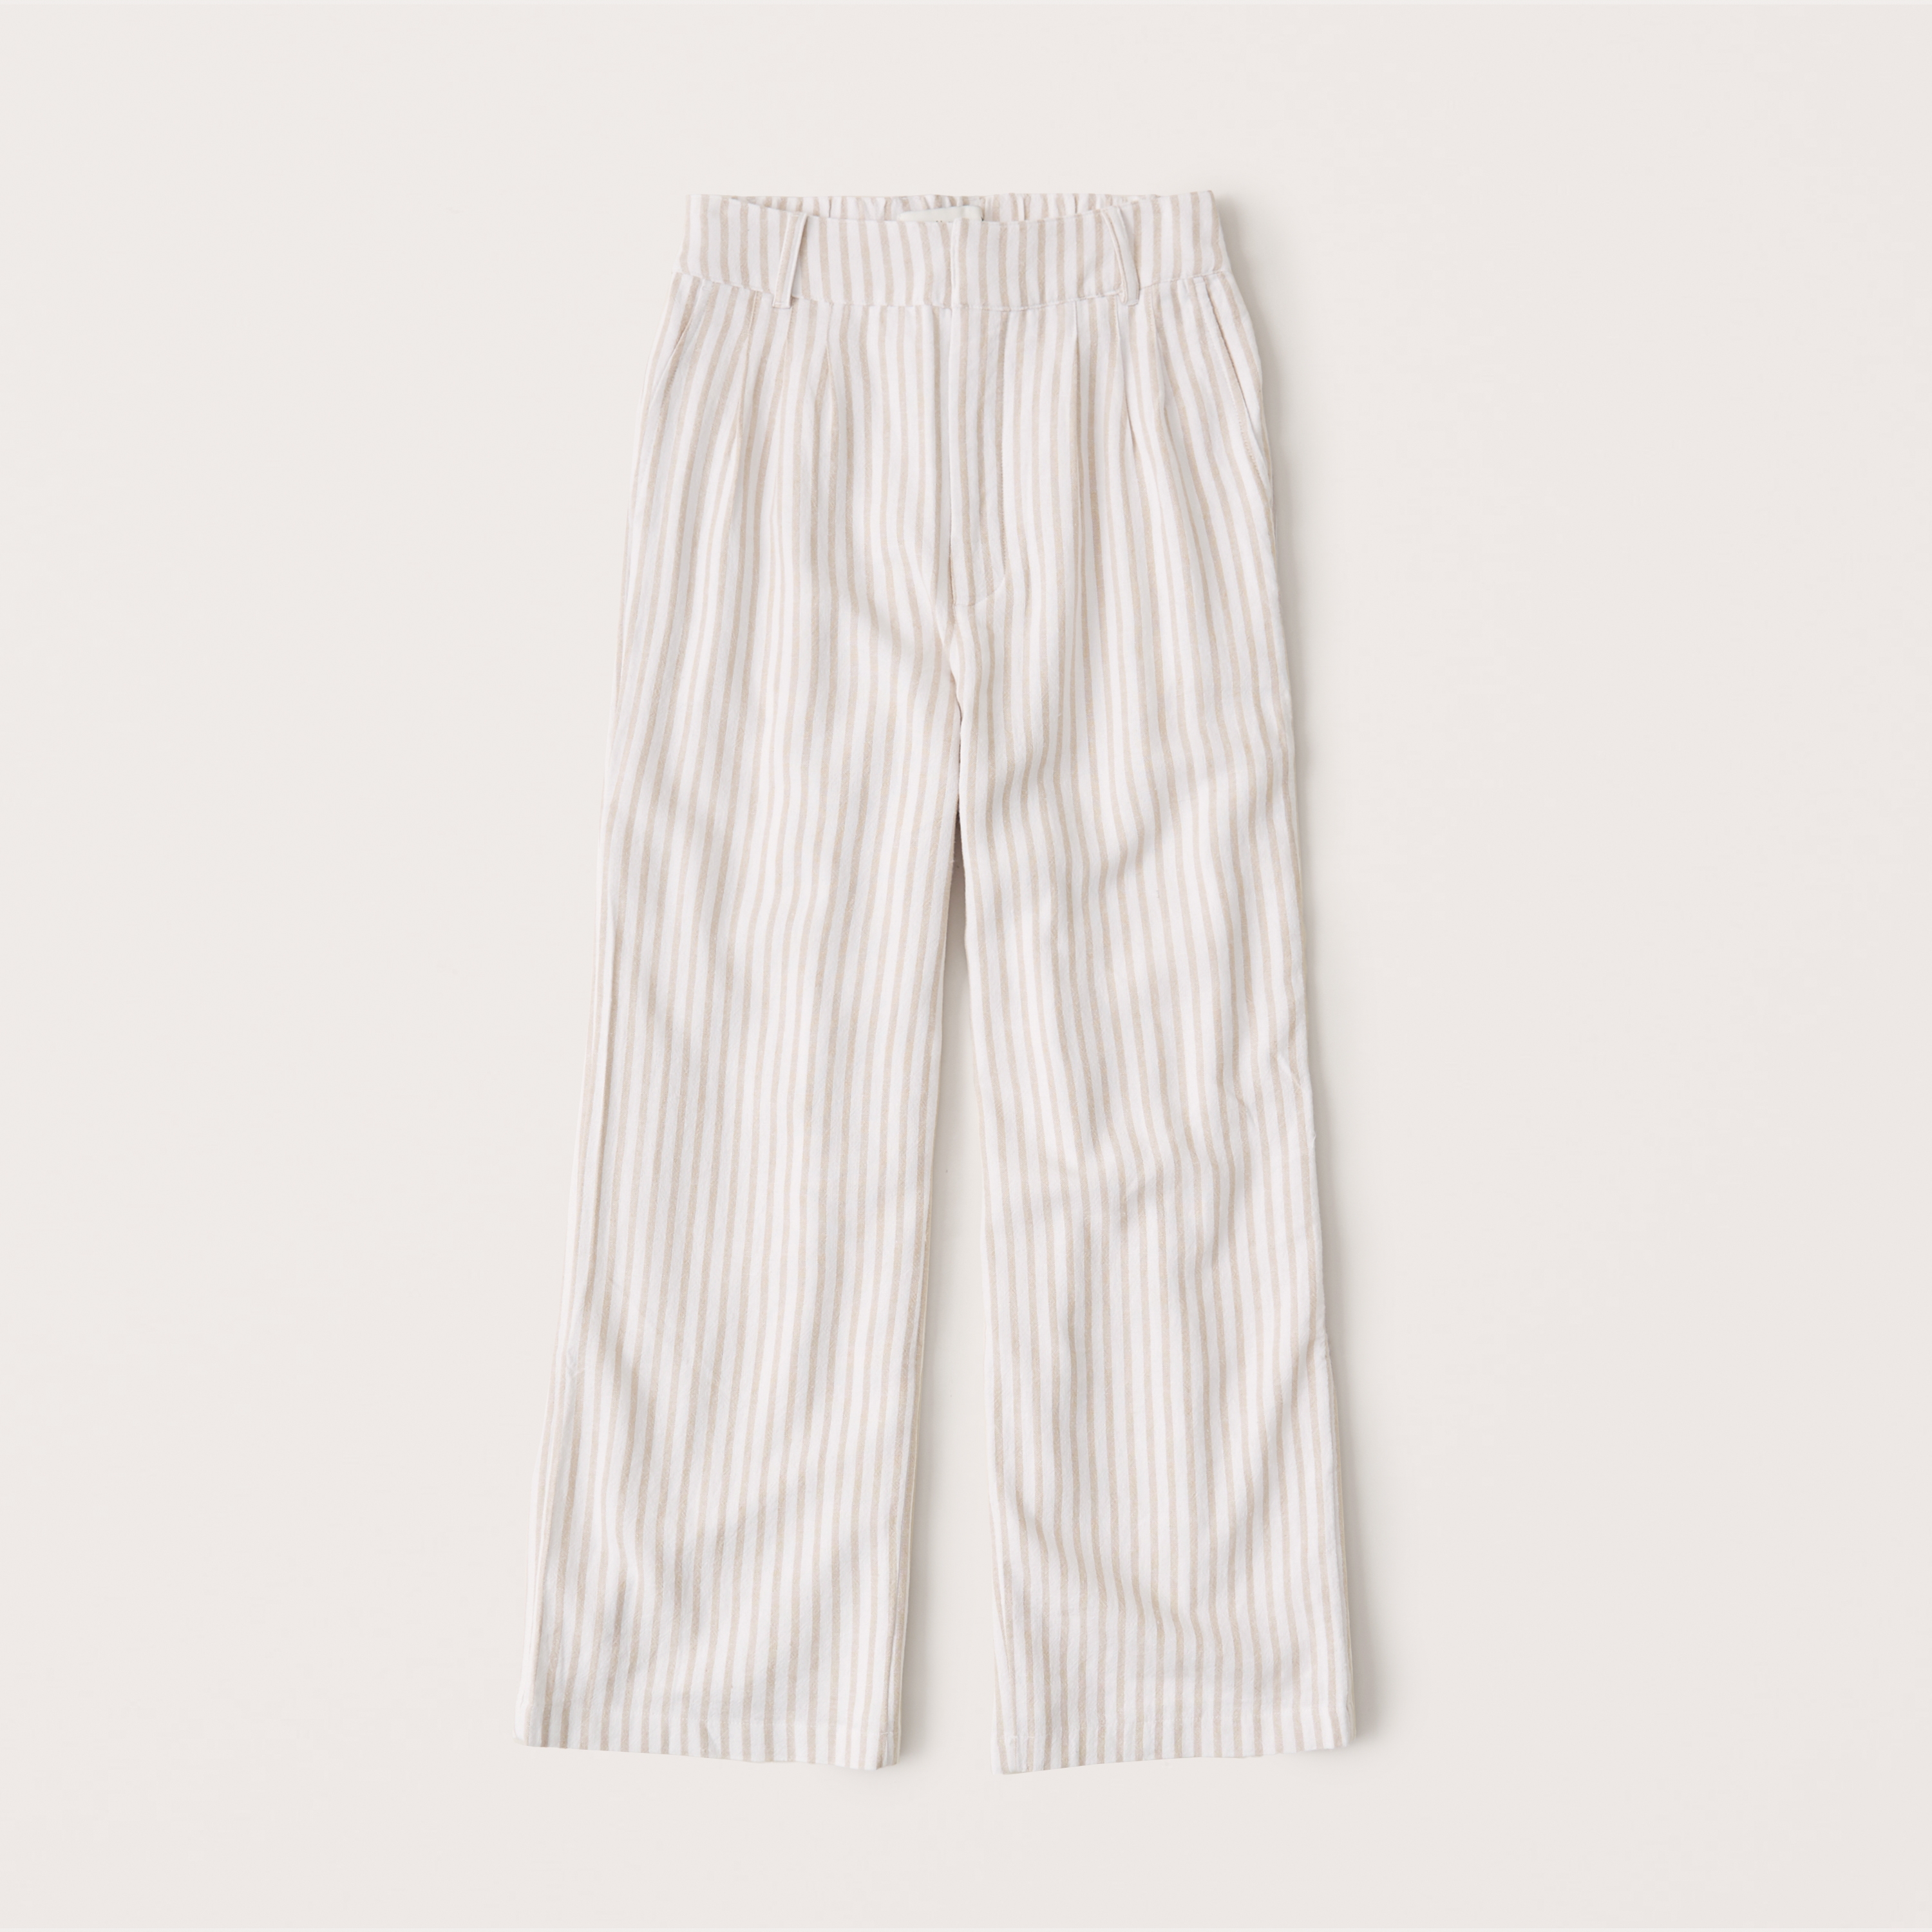 abercrombie white pants